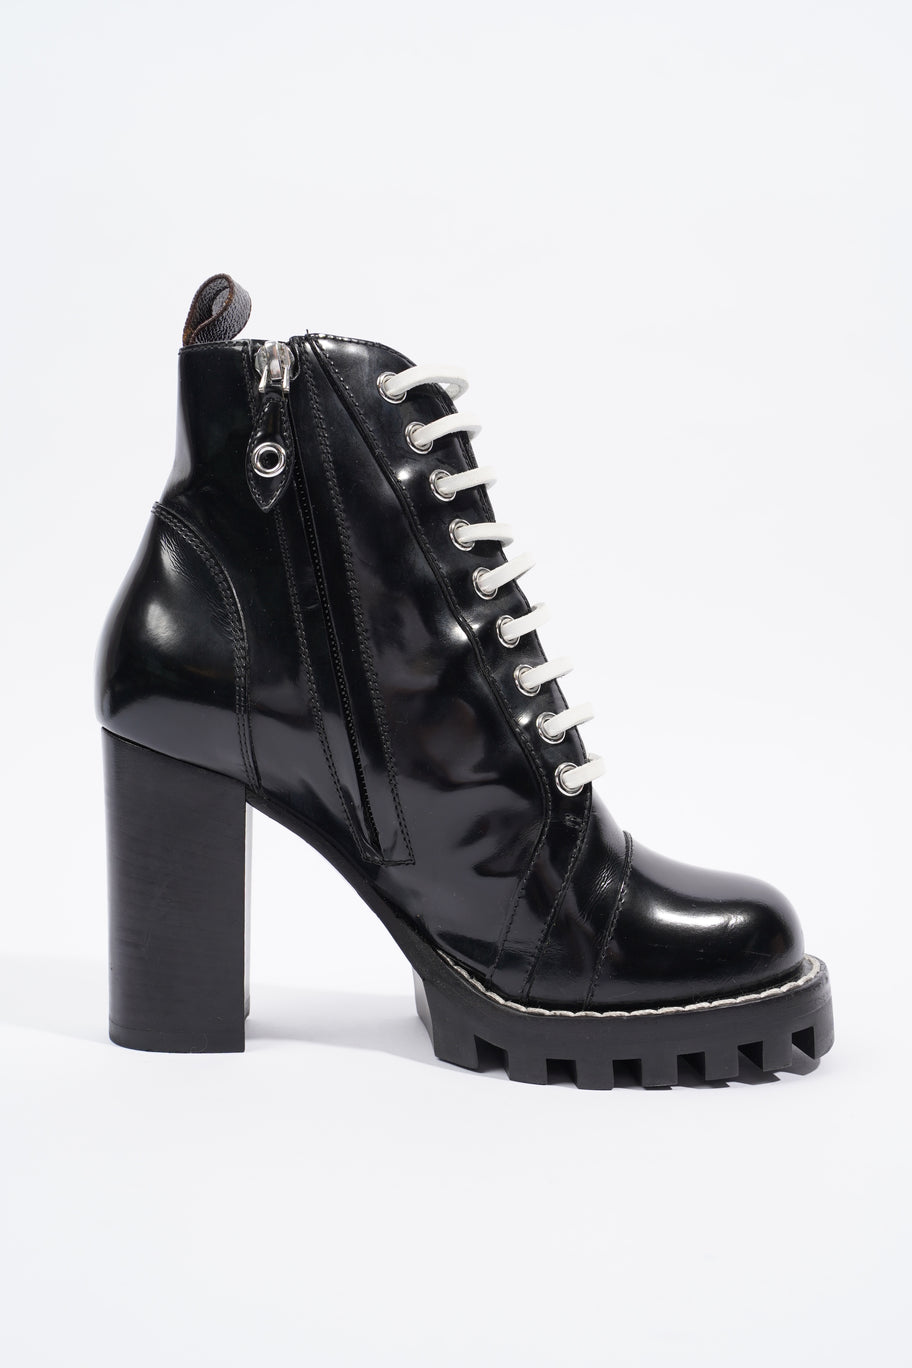 Louis Vuitton Star Trail Ankle Boot Patent Black EU 36 / UK 3 Image 4